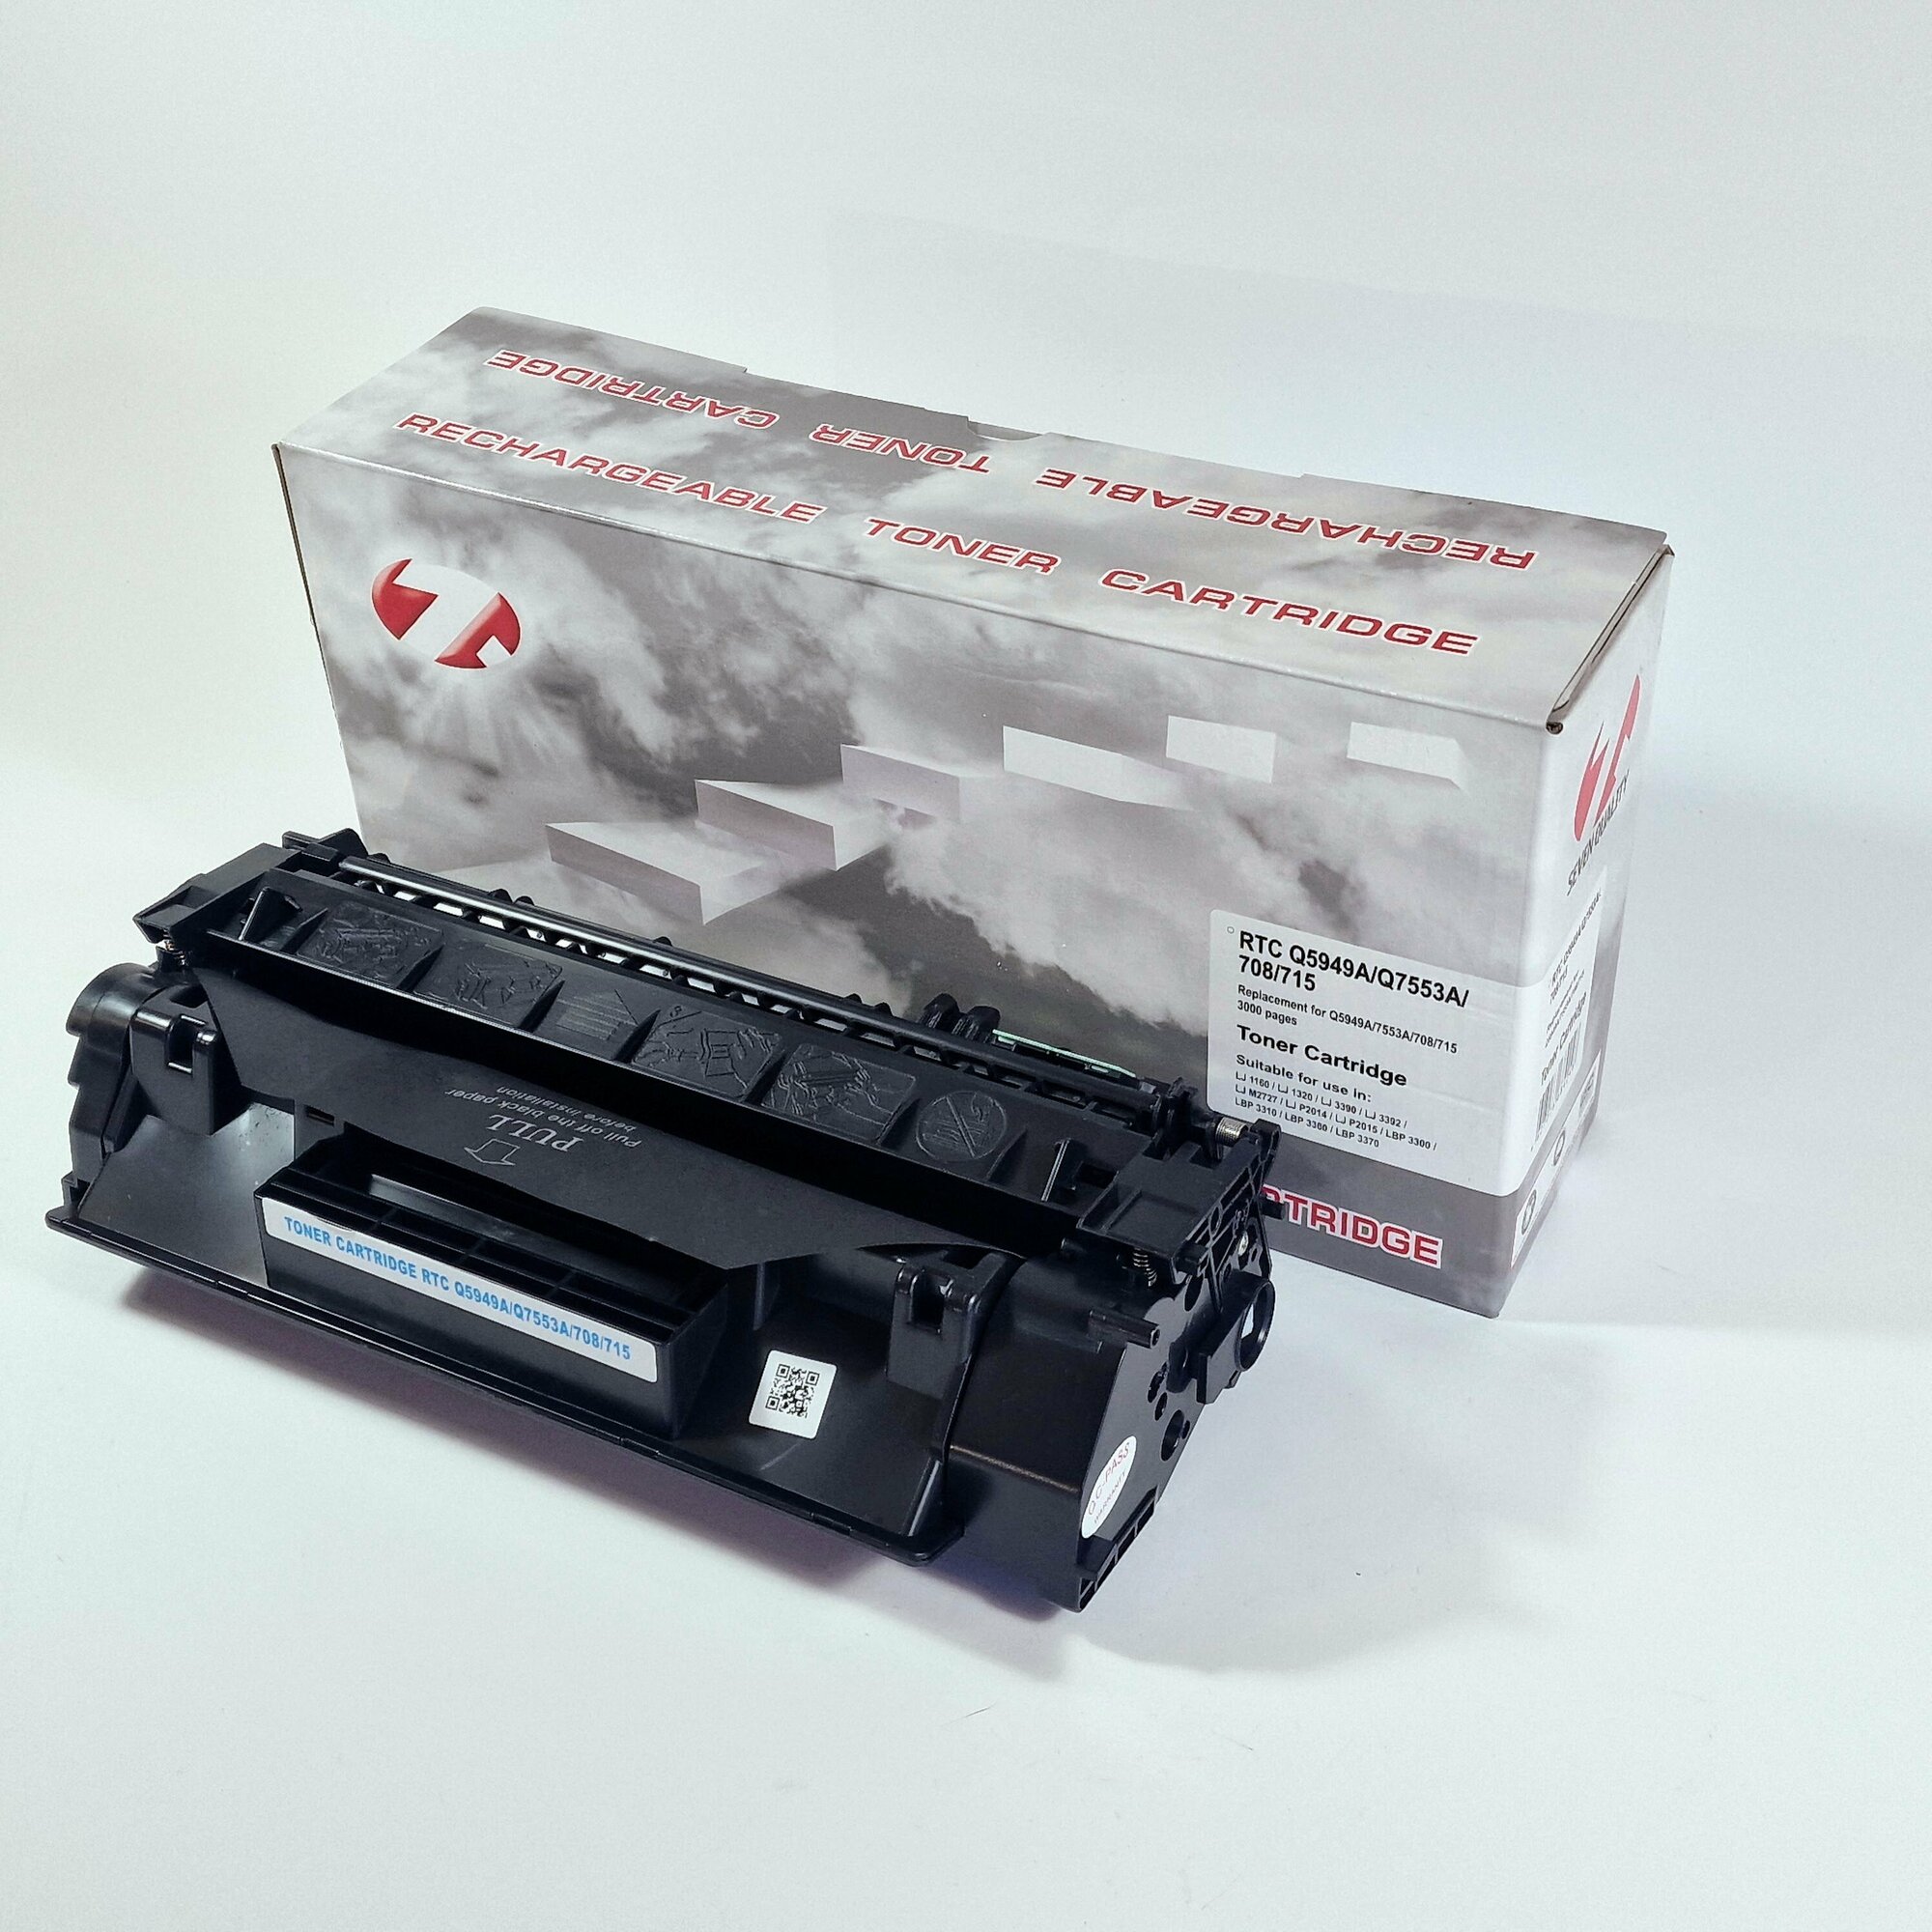 Картридж Q5949A Q7553A Cartridge 708 Cartridge 715, 7Q, для HP LJ 1160, 1320, P2015, черный, 3000 листов